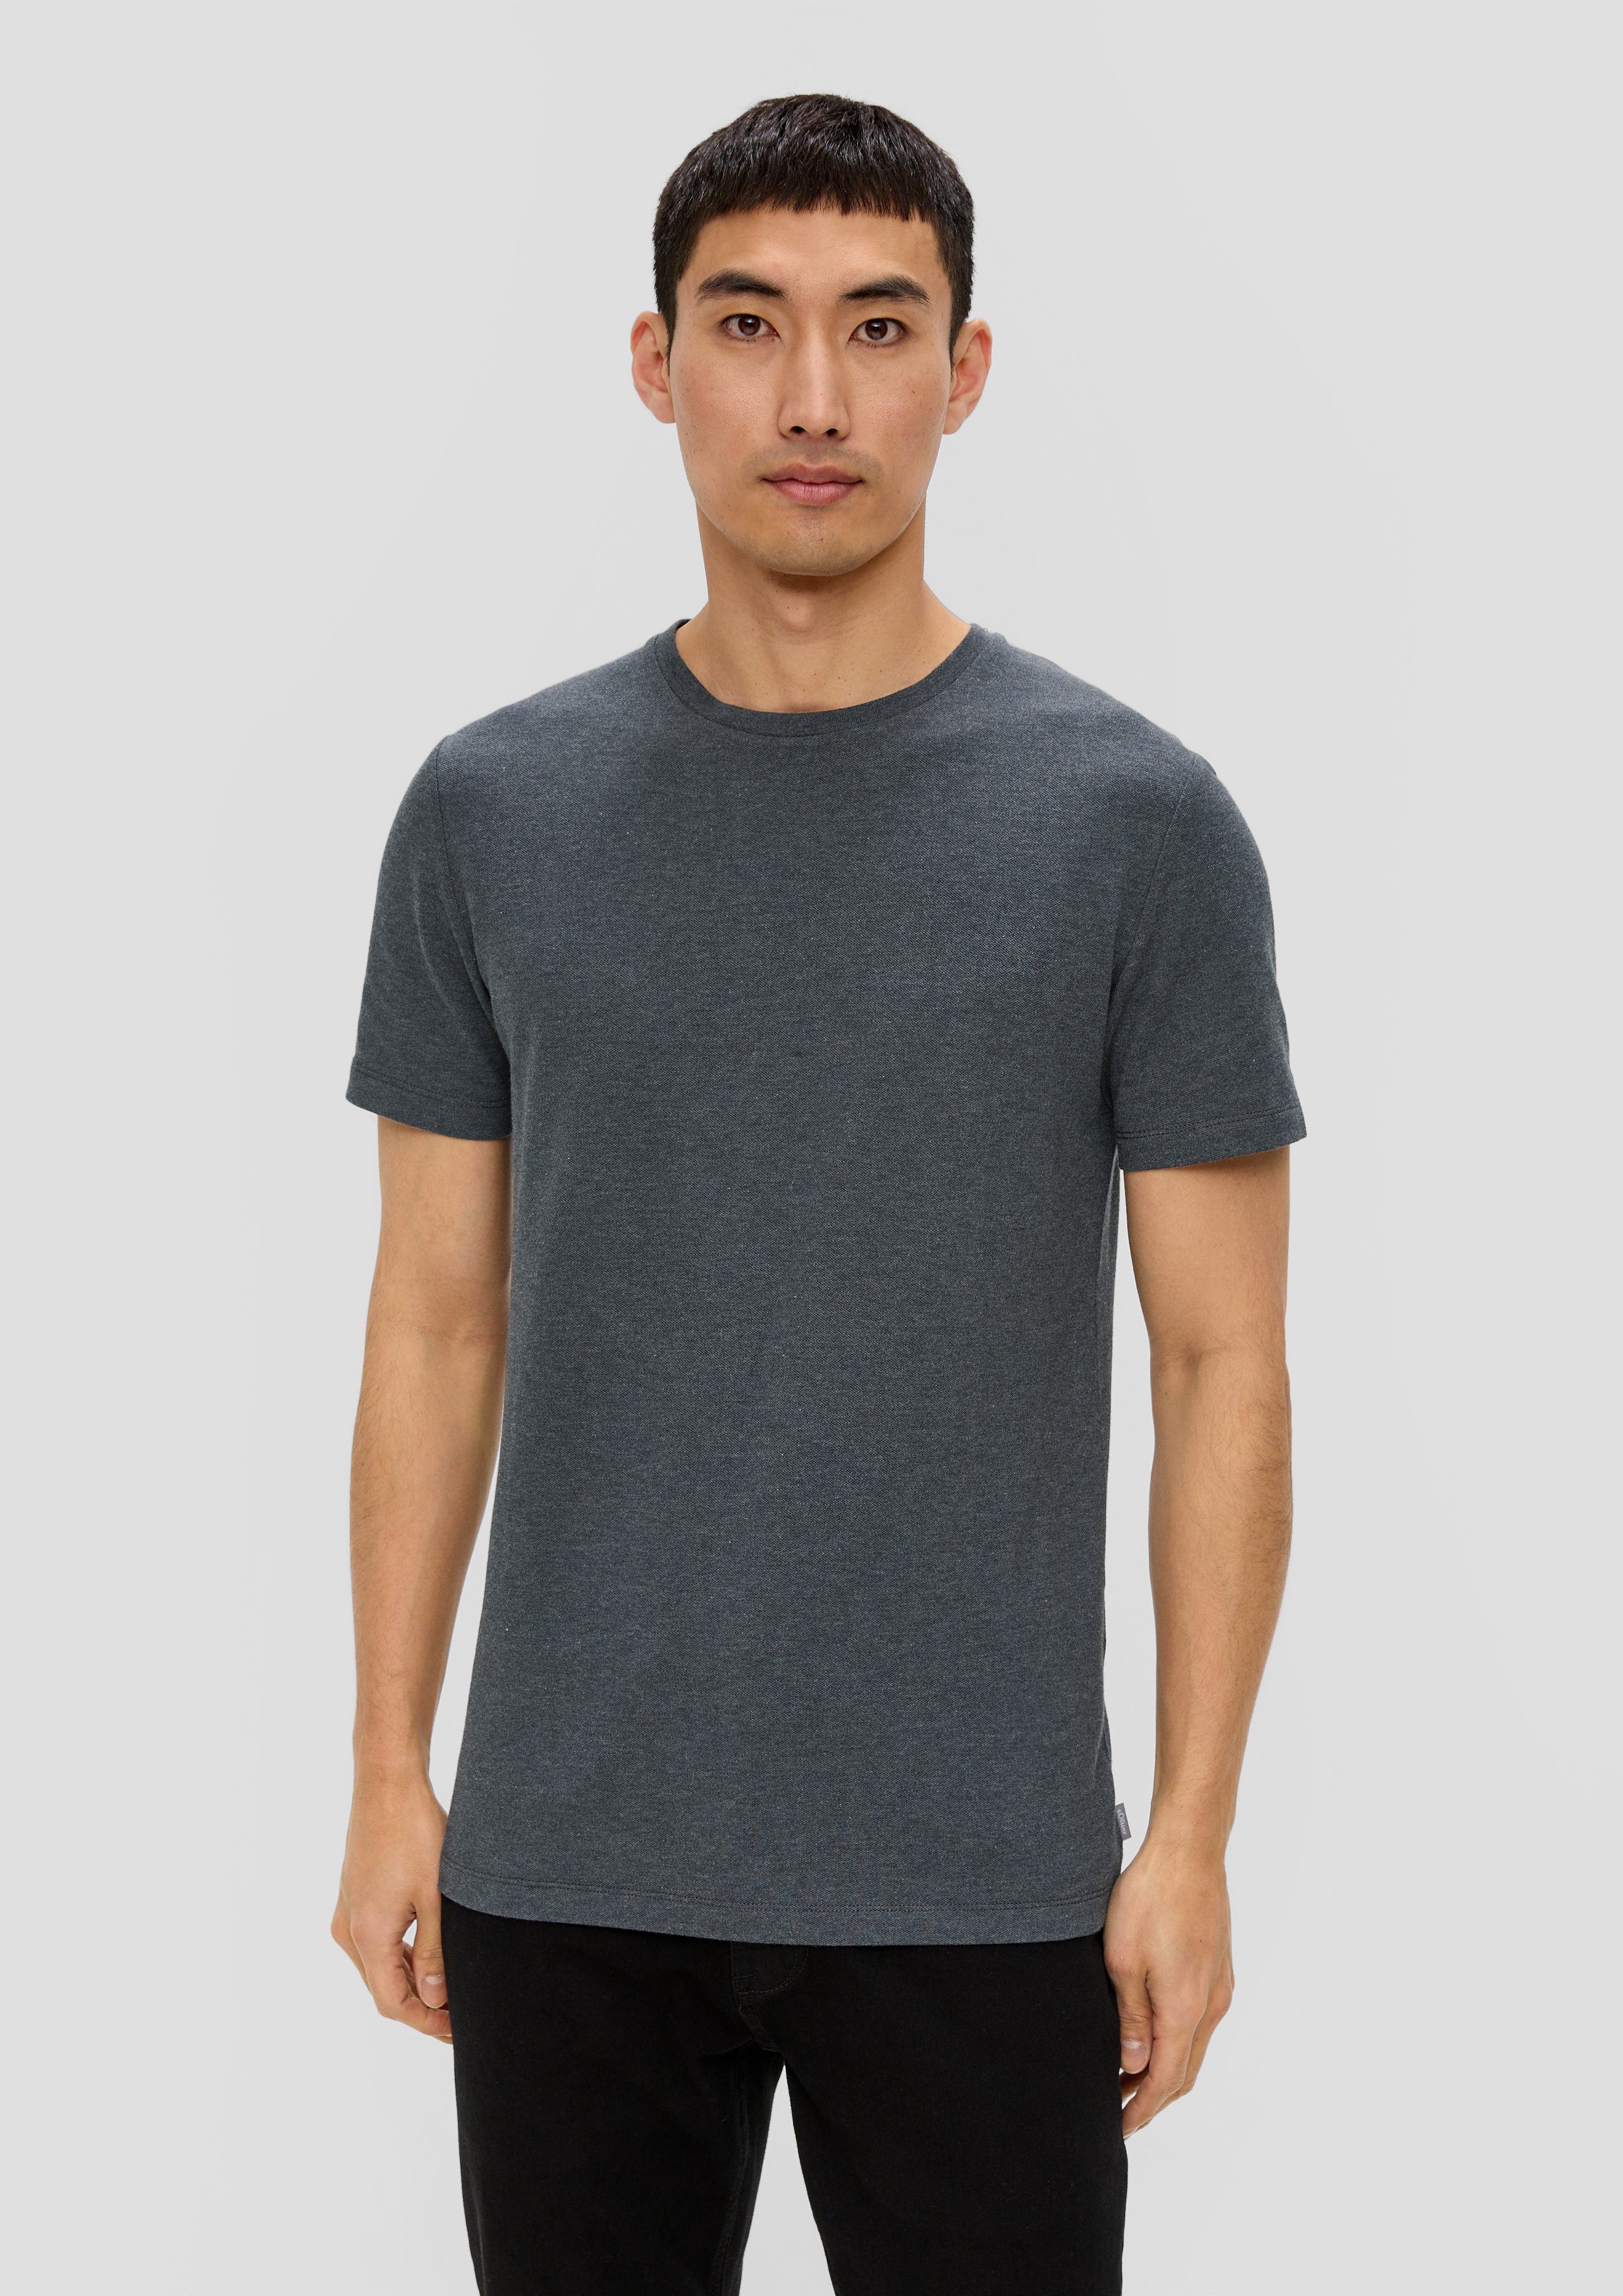 s.Oliver Kurzarmshirt T-Shirt mit Piqué-Struktur dunkelgrau Blende